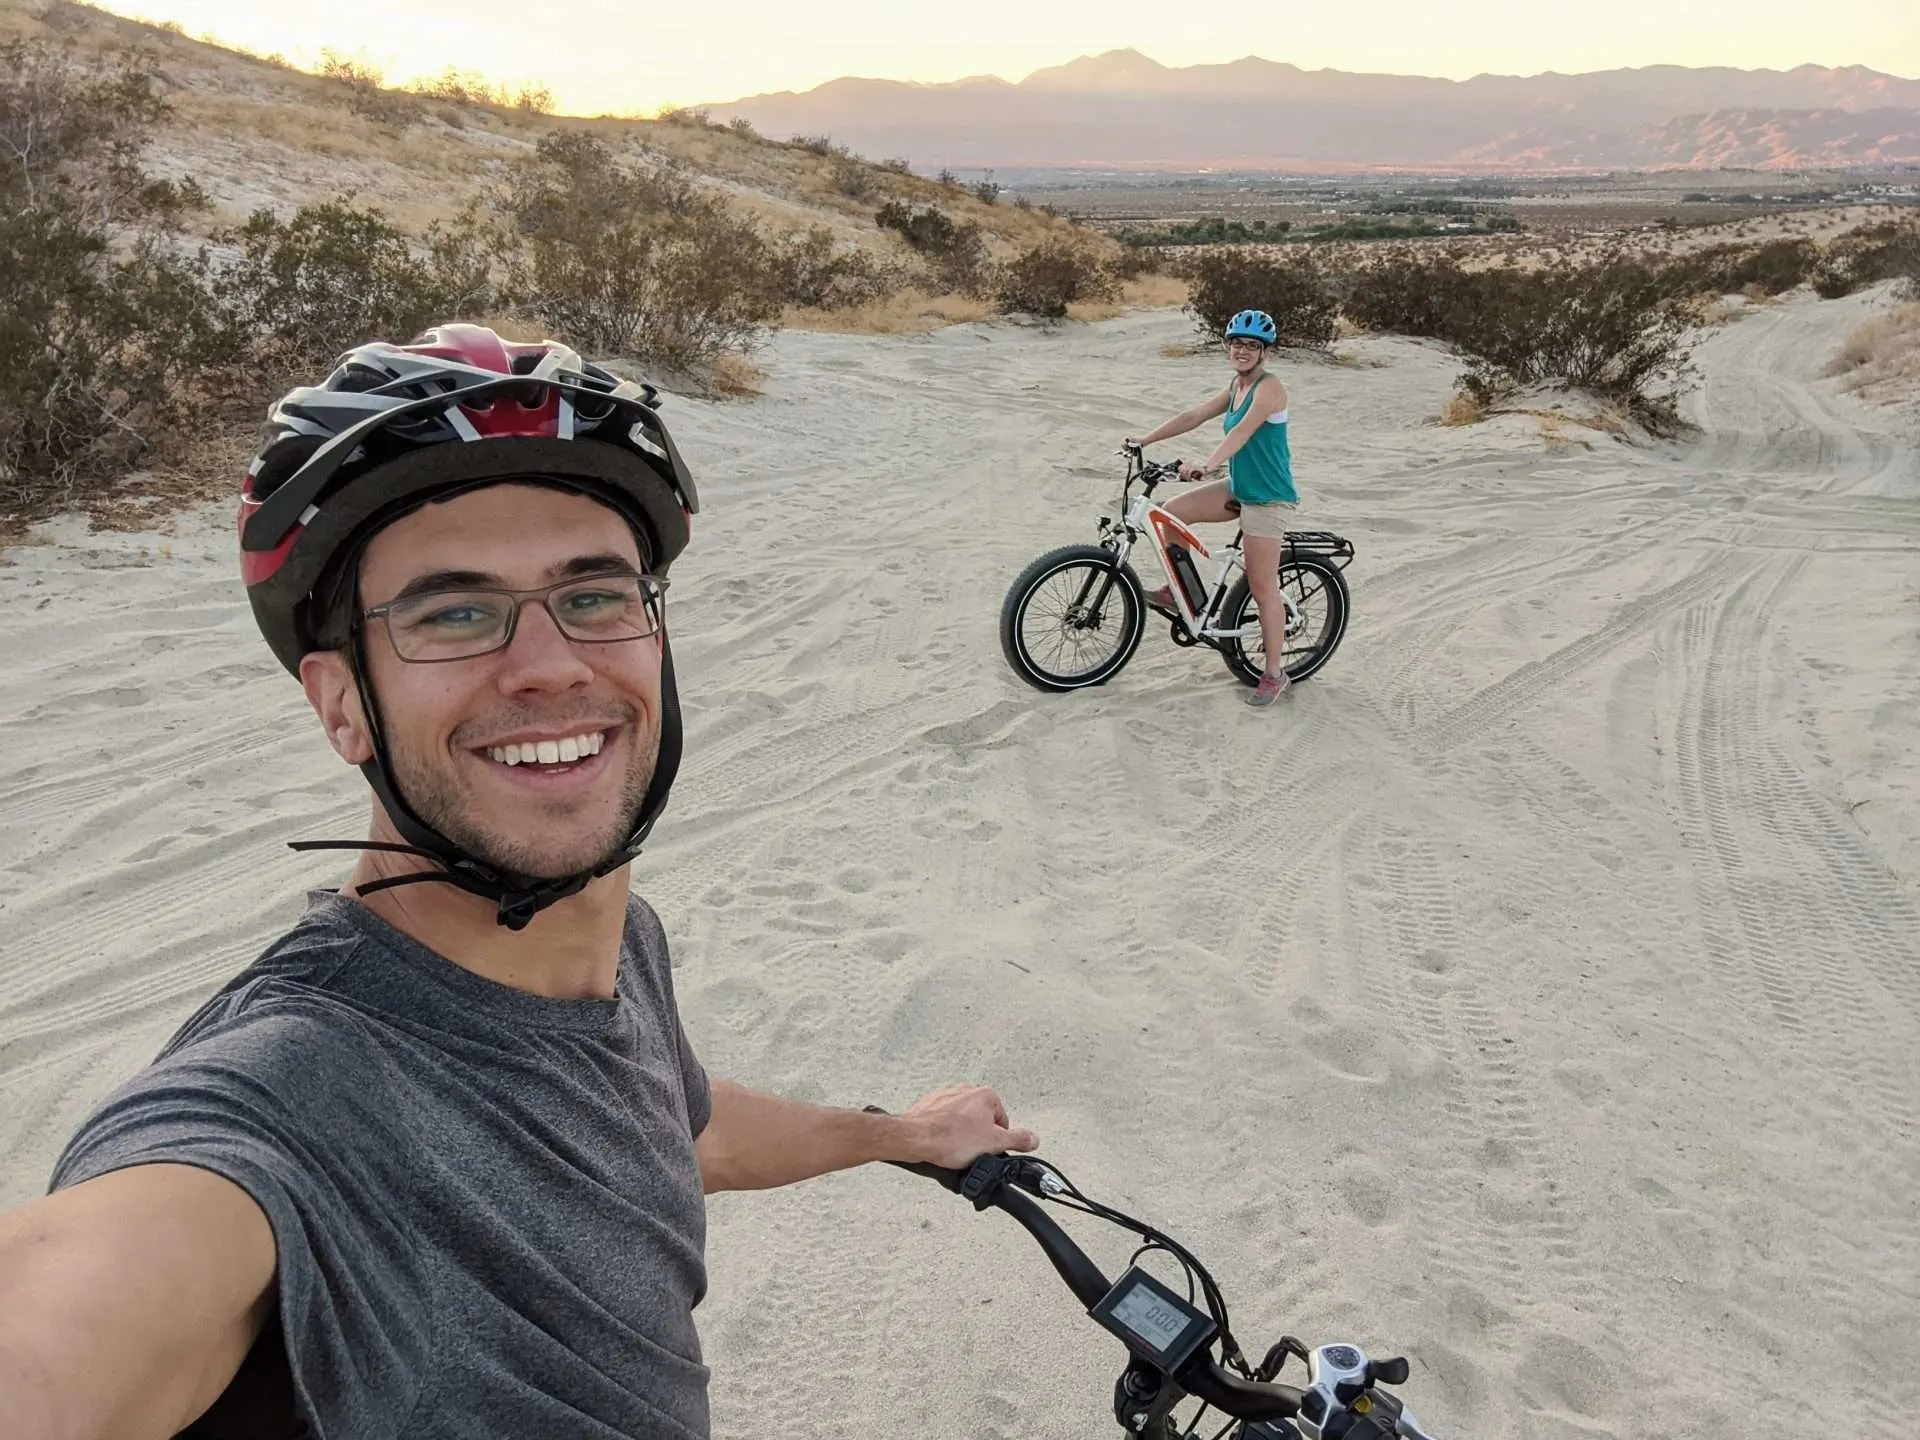 Mortons on the Move biking in the desert